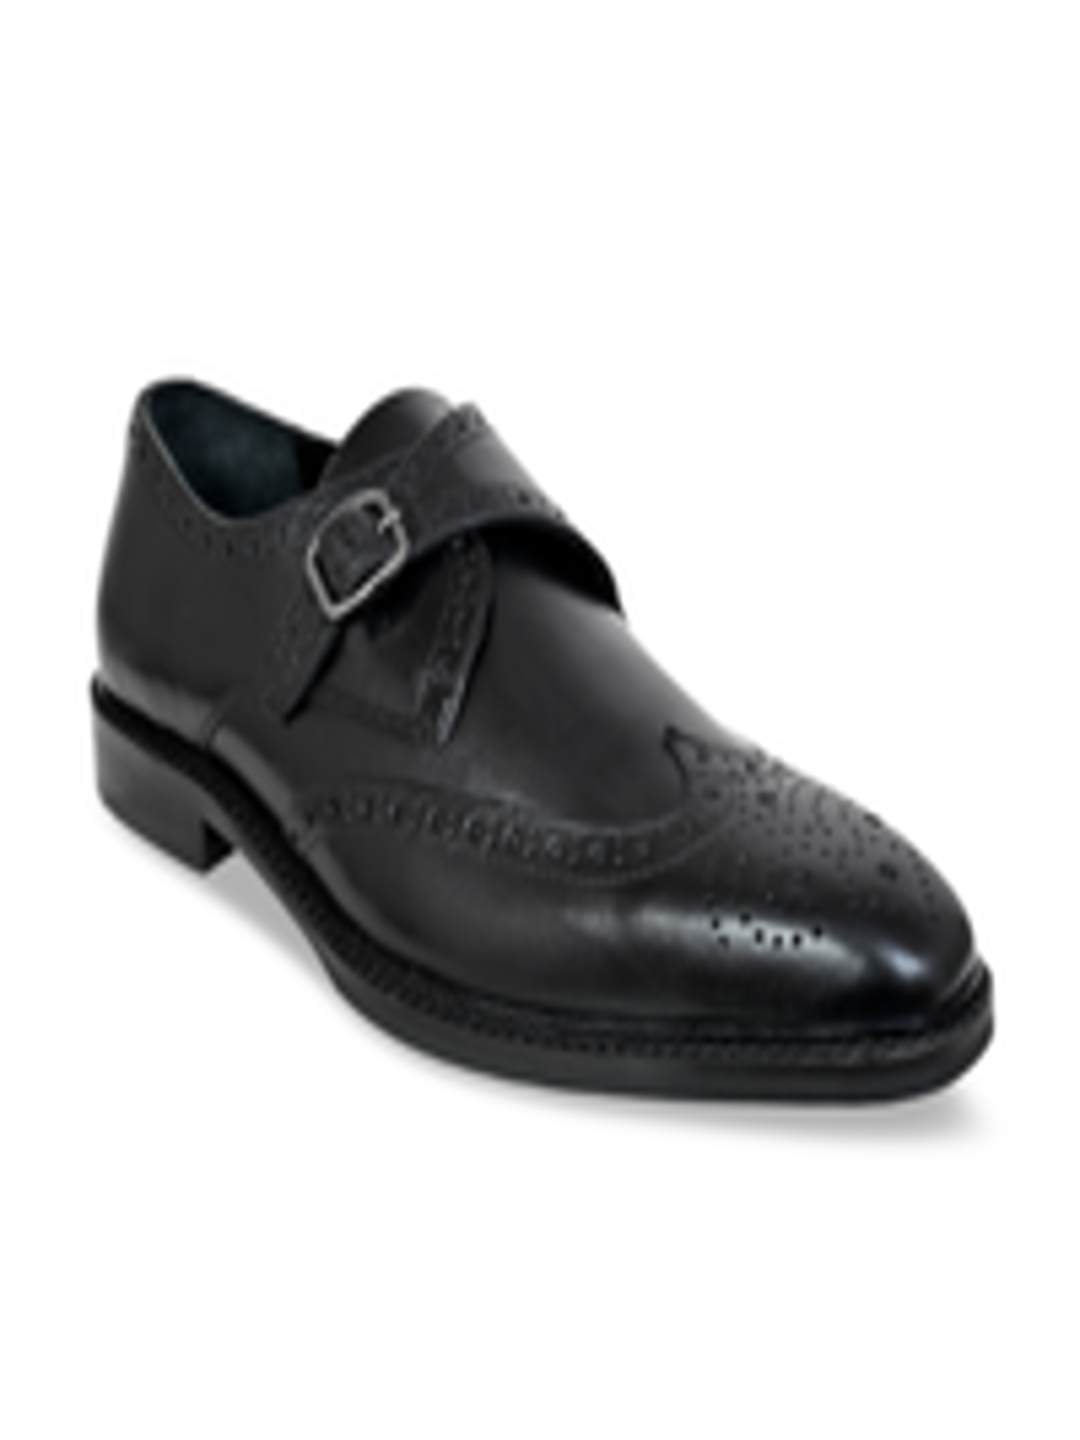 Buy HX London Men Brogues Single Straps Formal Monk Shoes - Formal ...